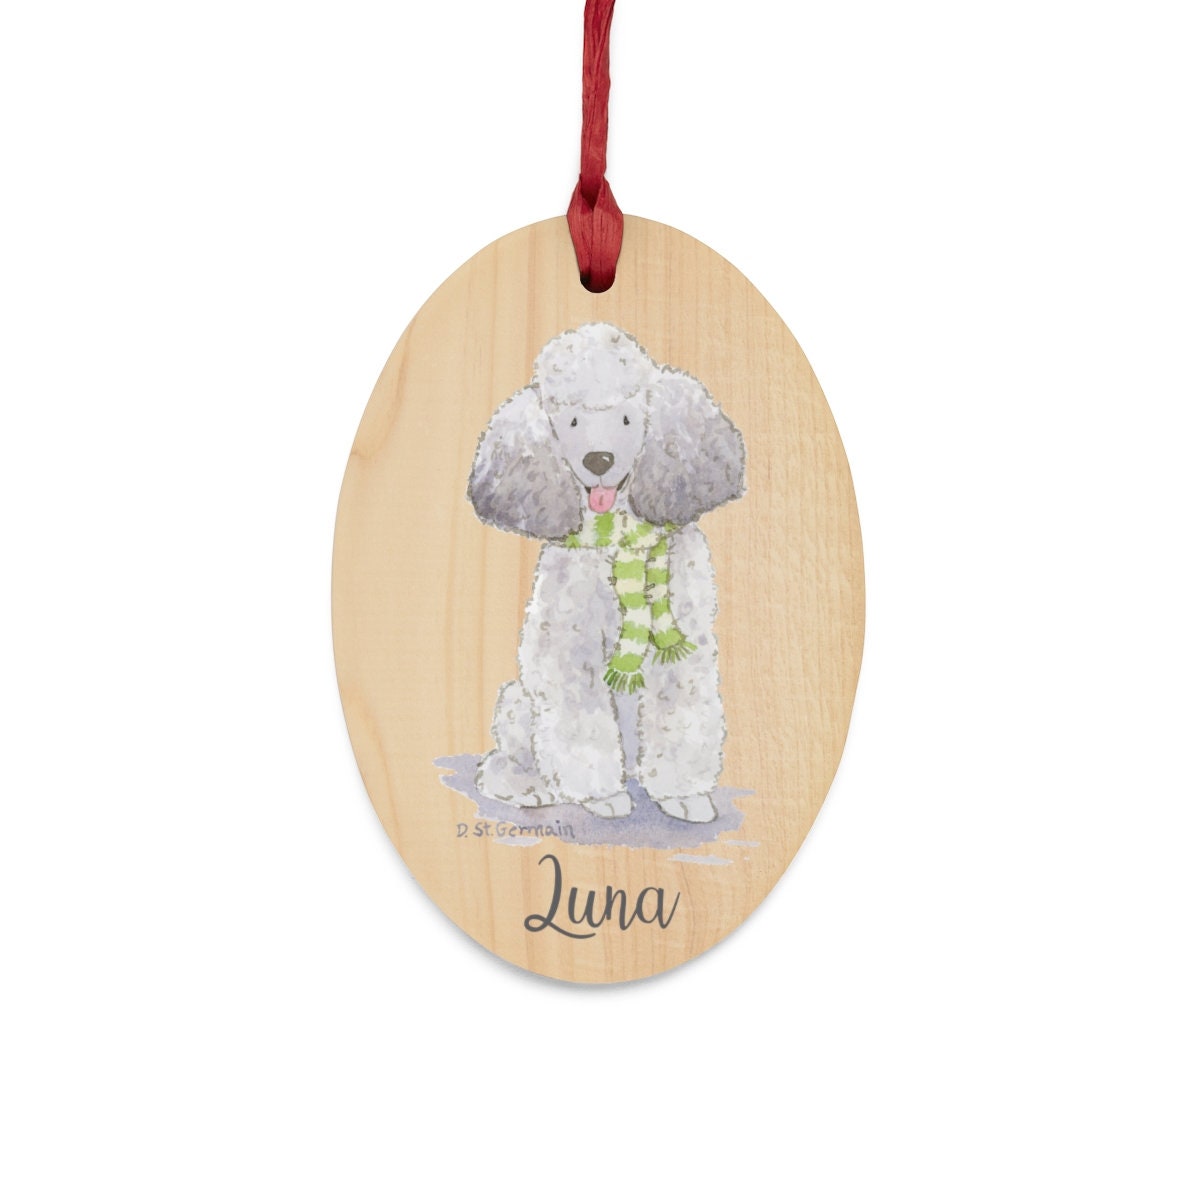 Poodle Ornament, Rustic Wood Ornament, Poodle Gift, Silver Poodle, Toy Poodle, Poodle Lover Gift, Stocking Stuffer Personalized Dog Ornament